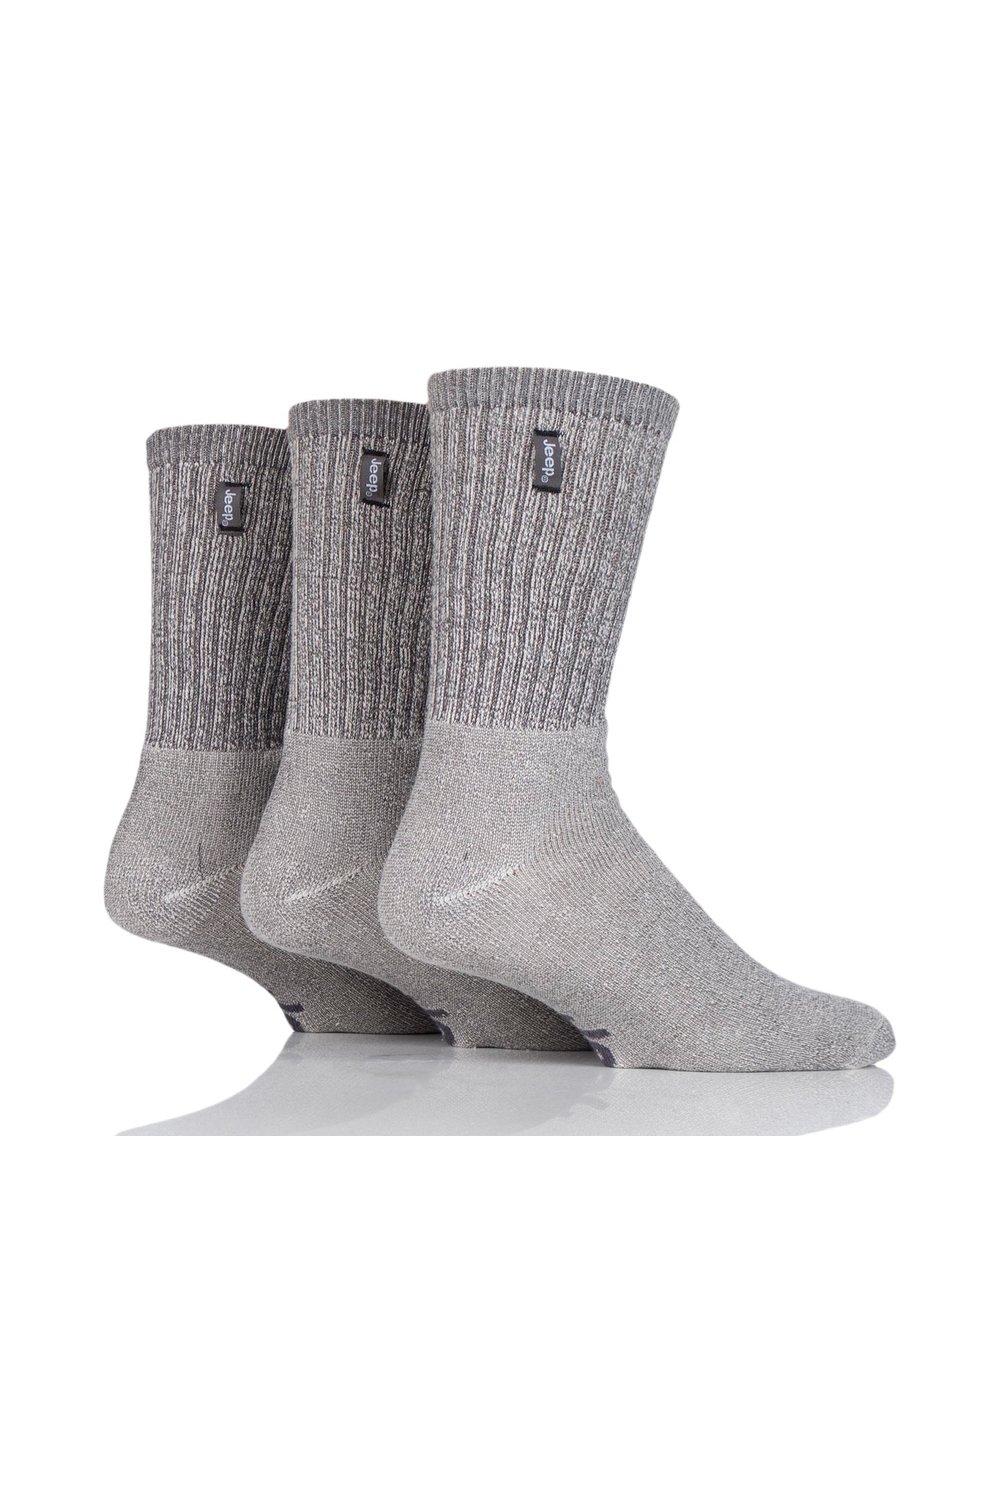 3 Pair Urban Trail Cotton Sports Socks